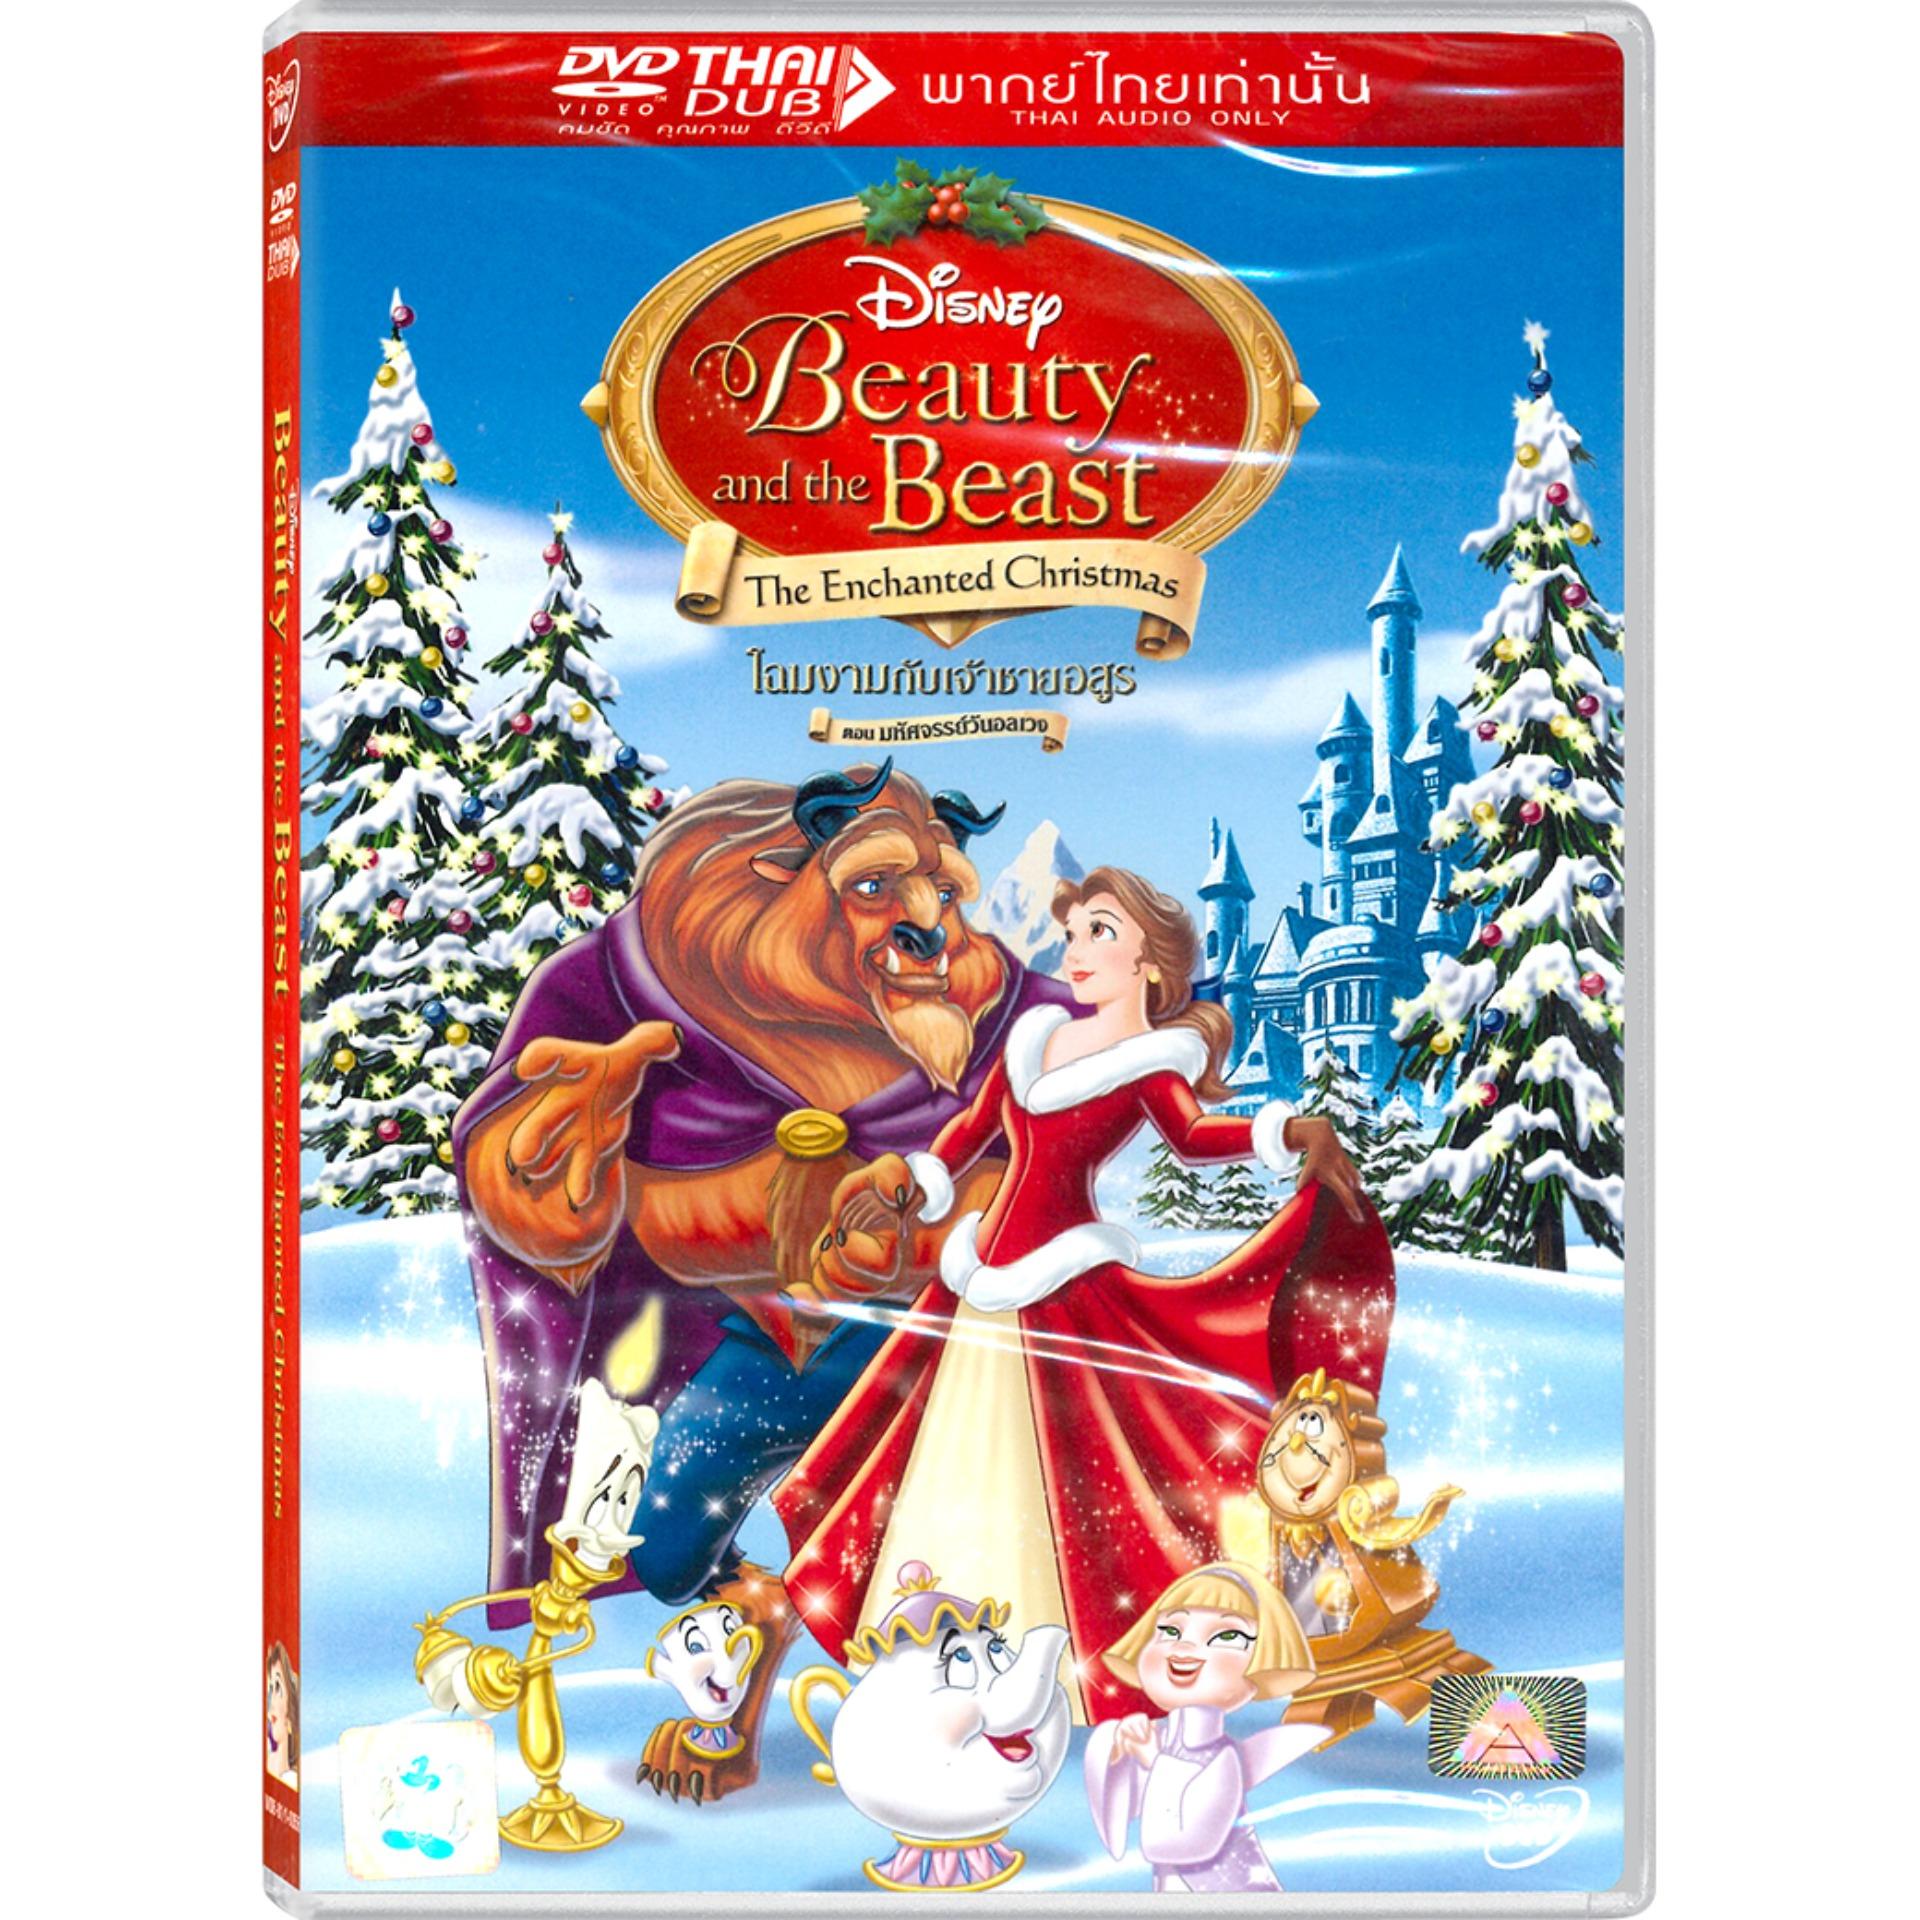 Media Play Beauty And The Beast: The Enchanted Christmas โฉมงามกับเจ้าชายอสูร : มหัศจรรย์วันอลเวง (Disney) (DVD-vanilla)